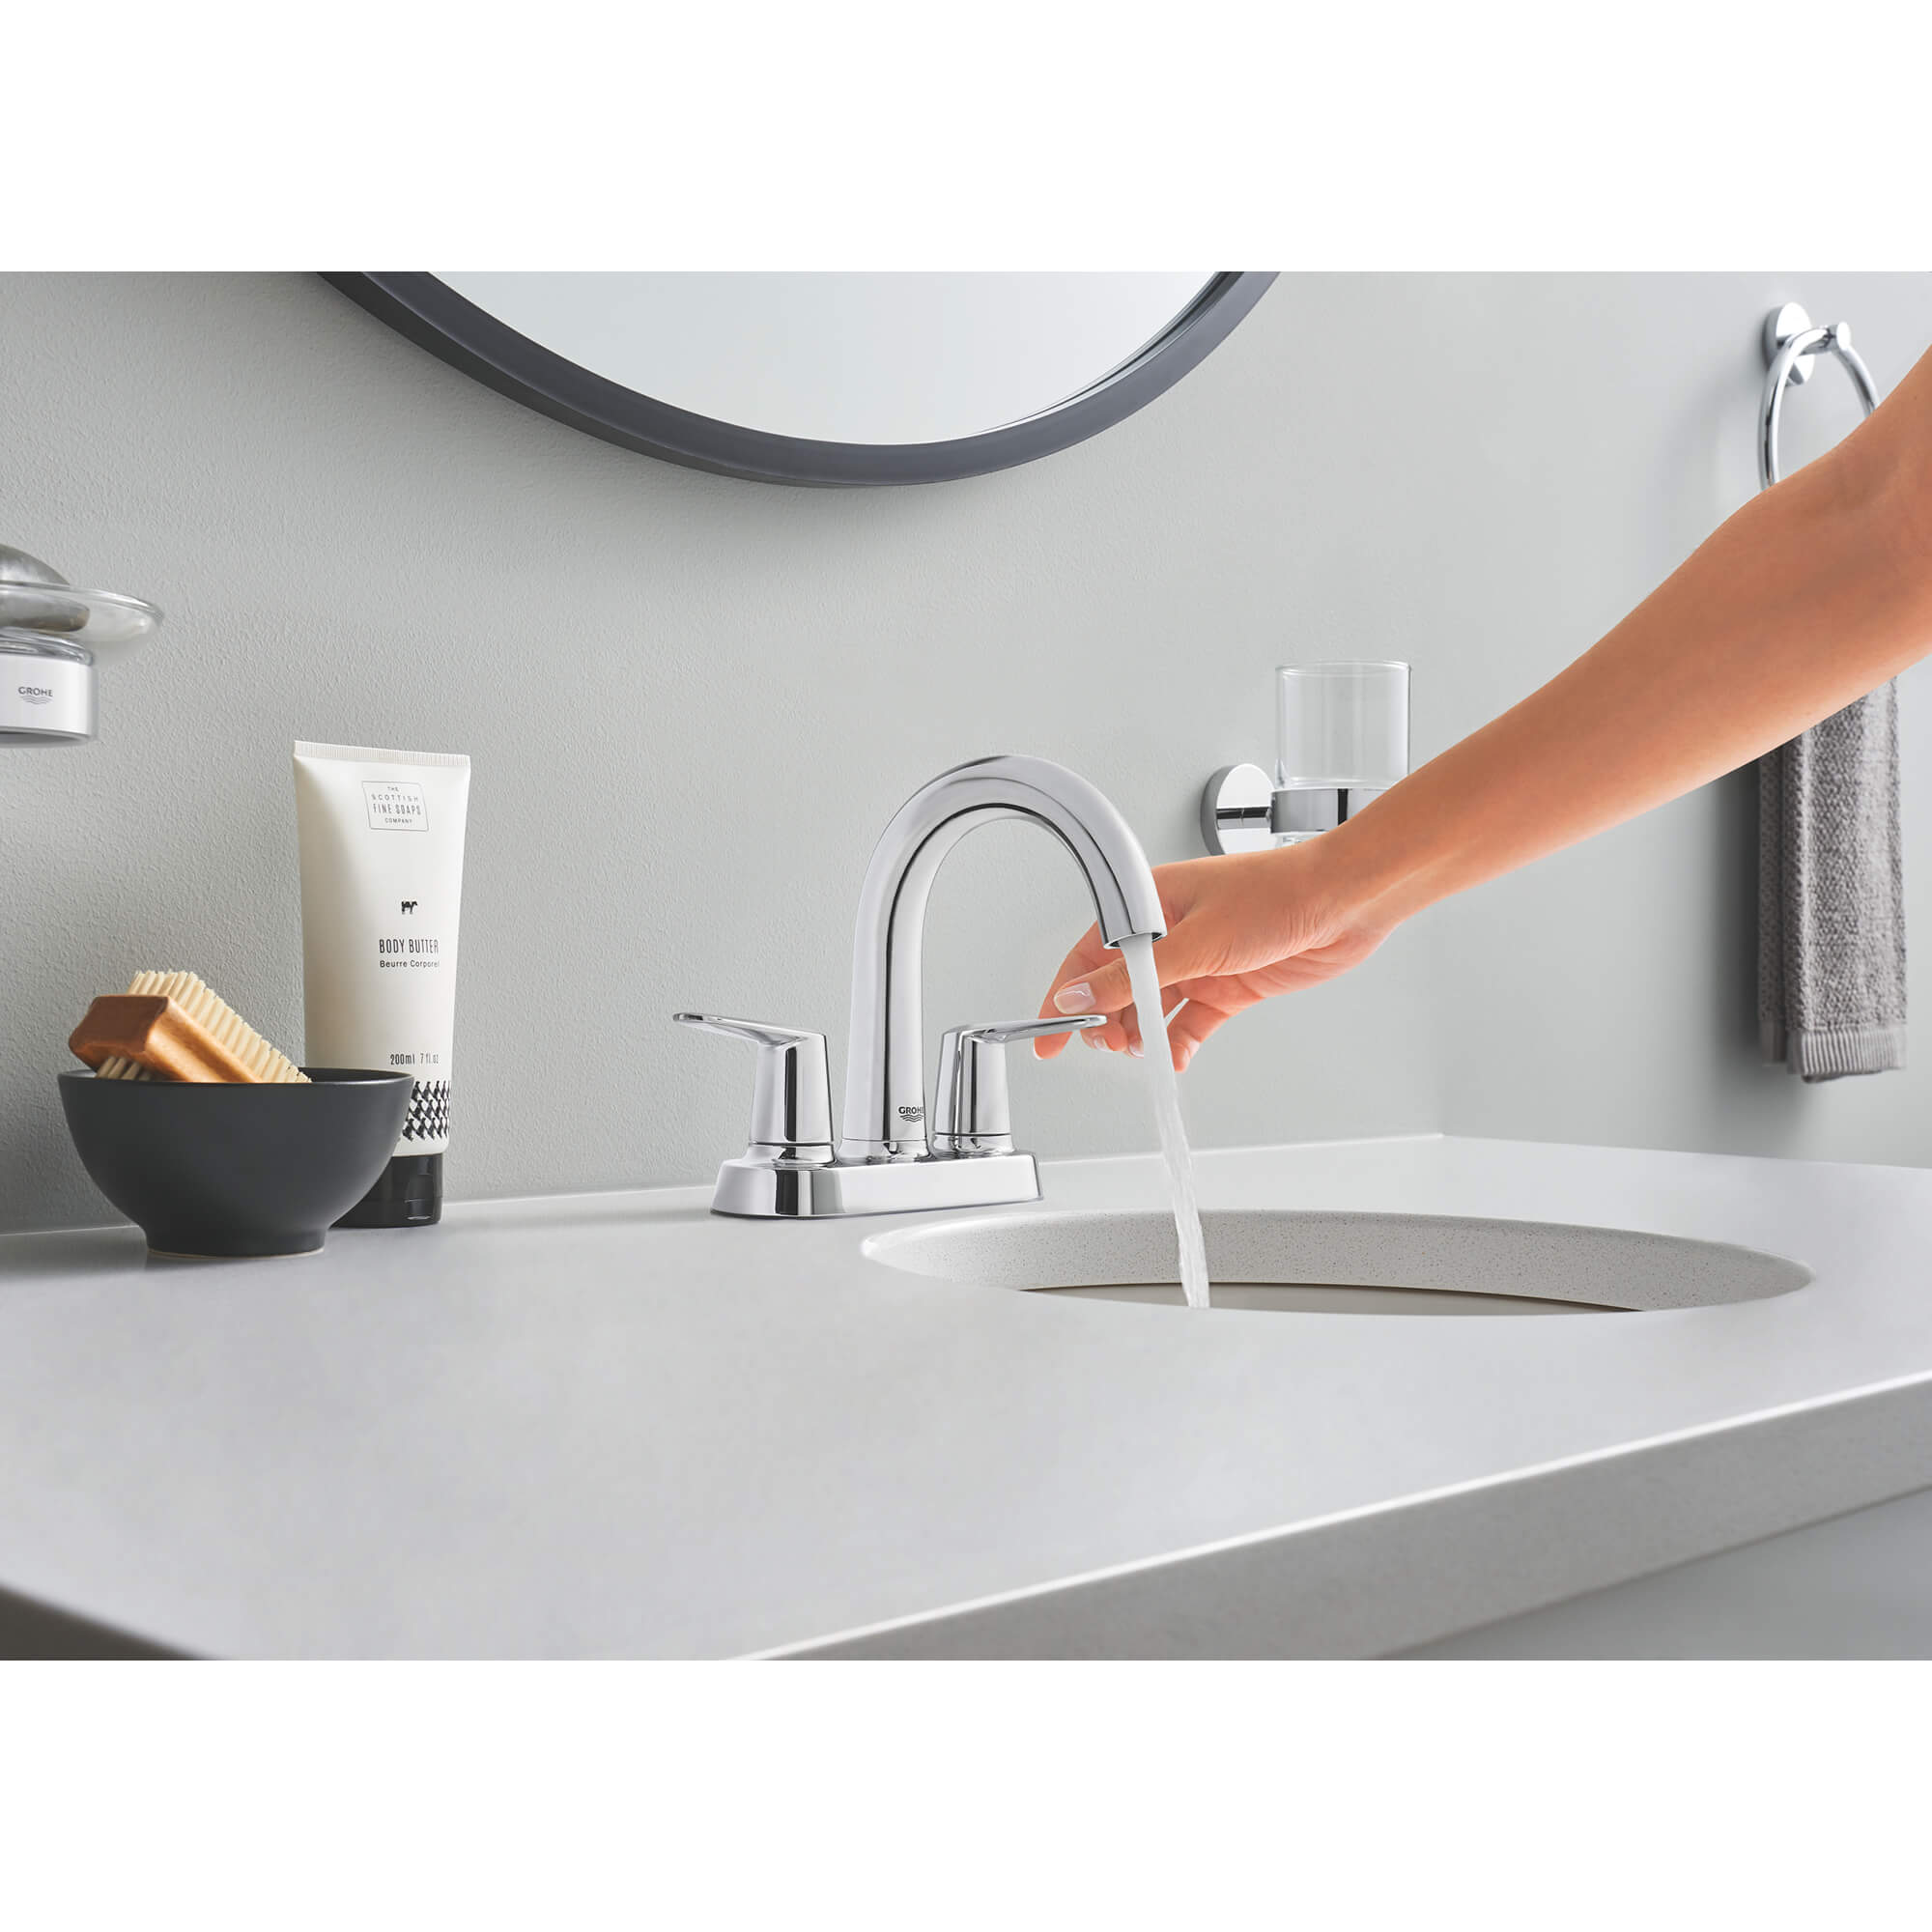 2-Handle 4" Centerset Bathroom Faucet